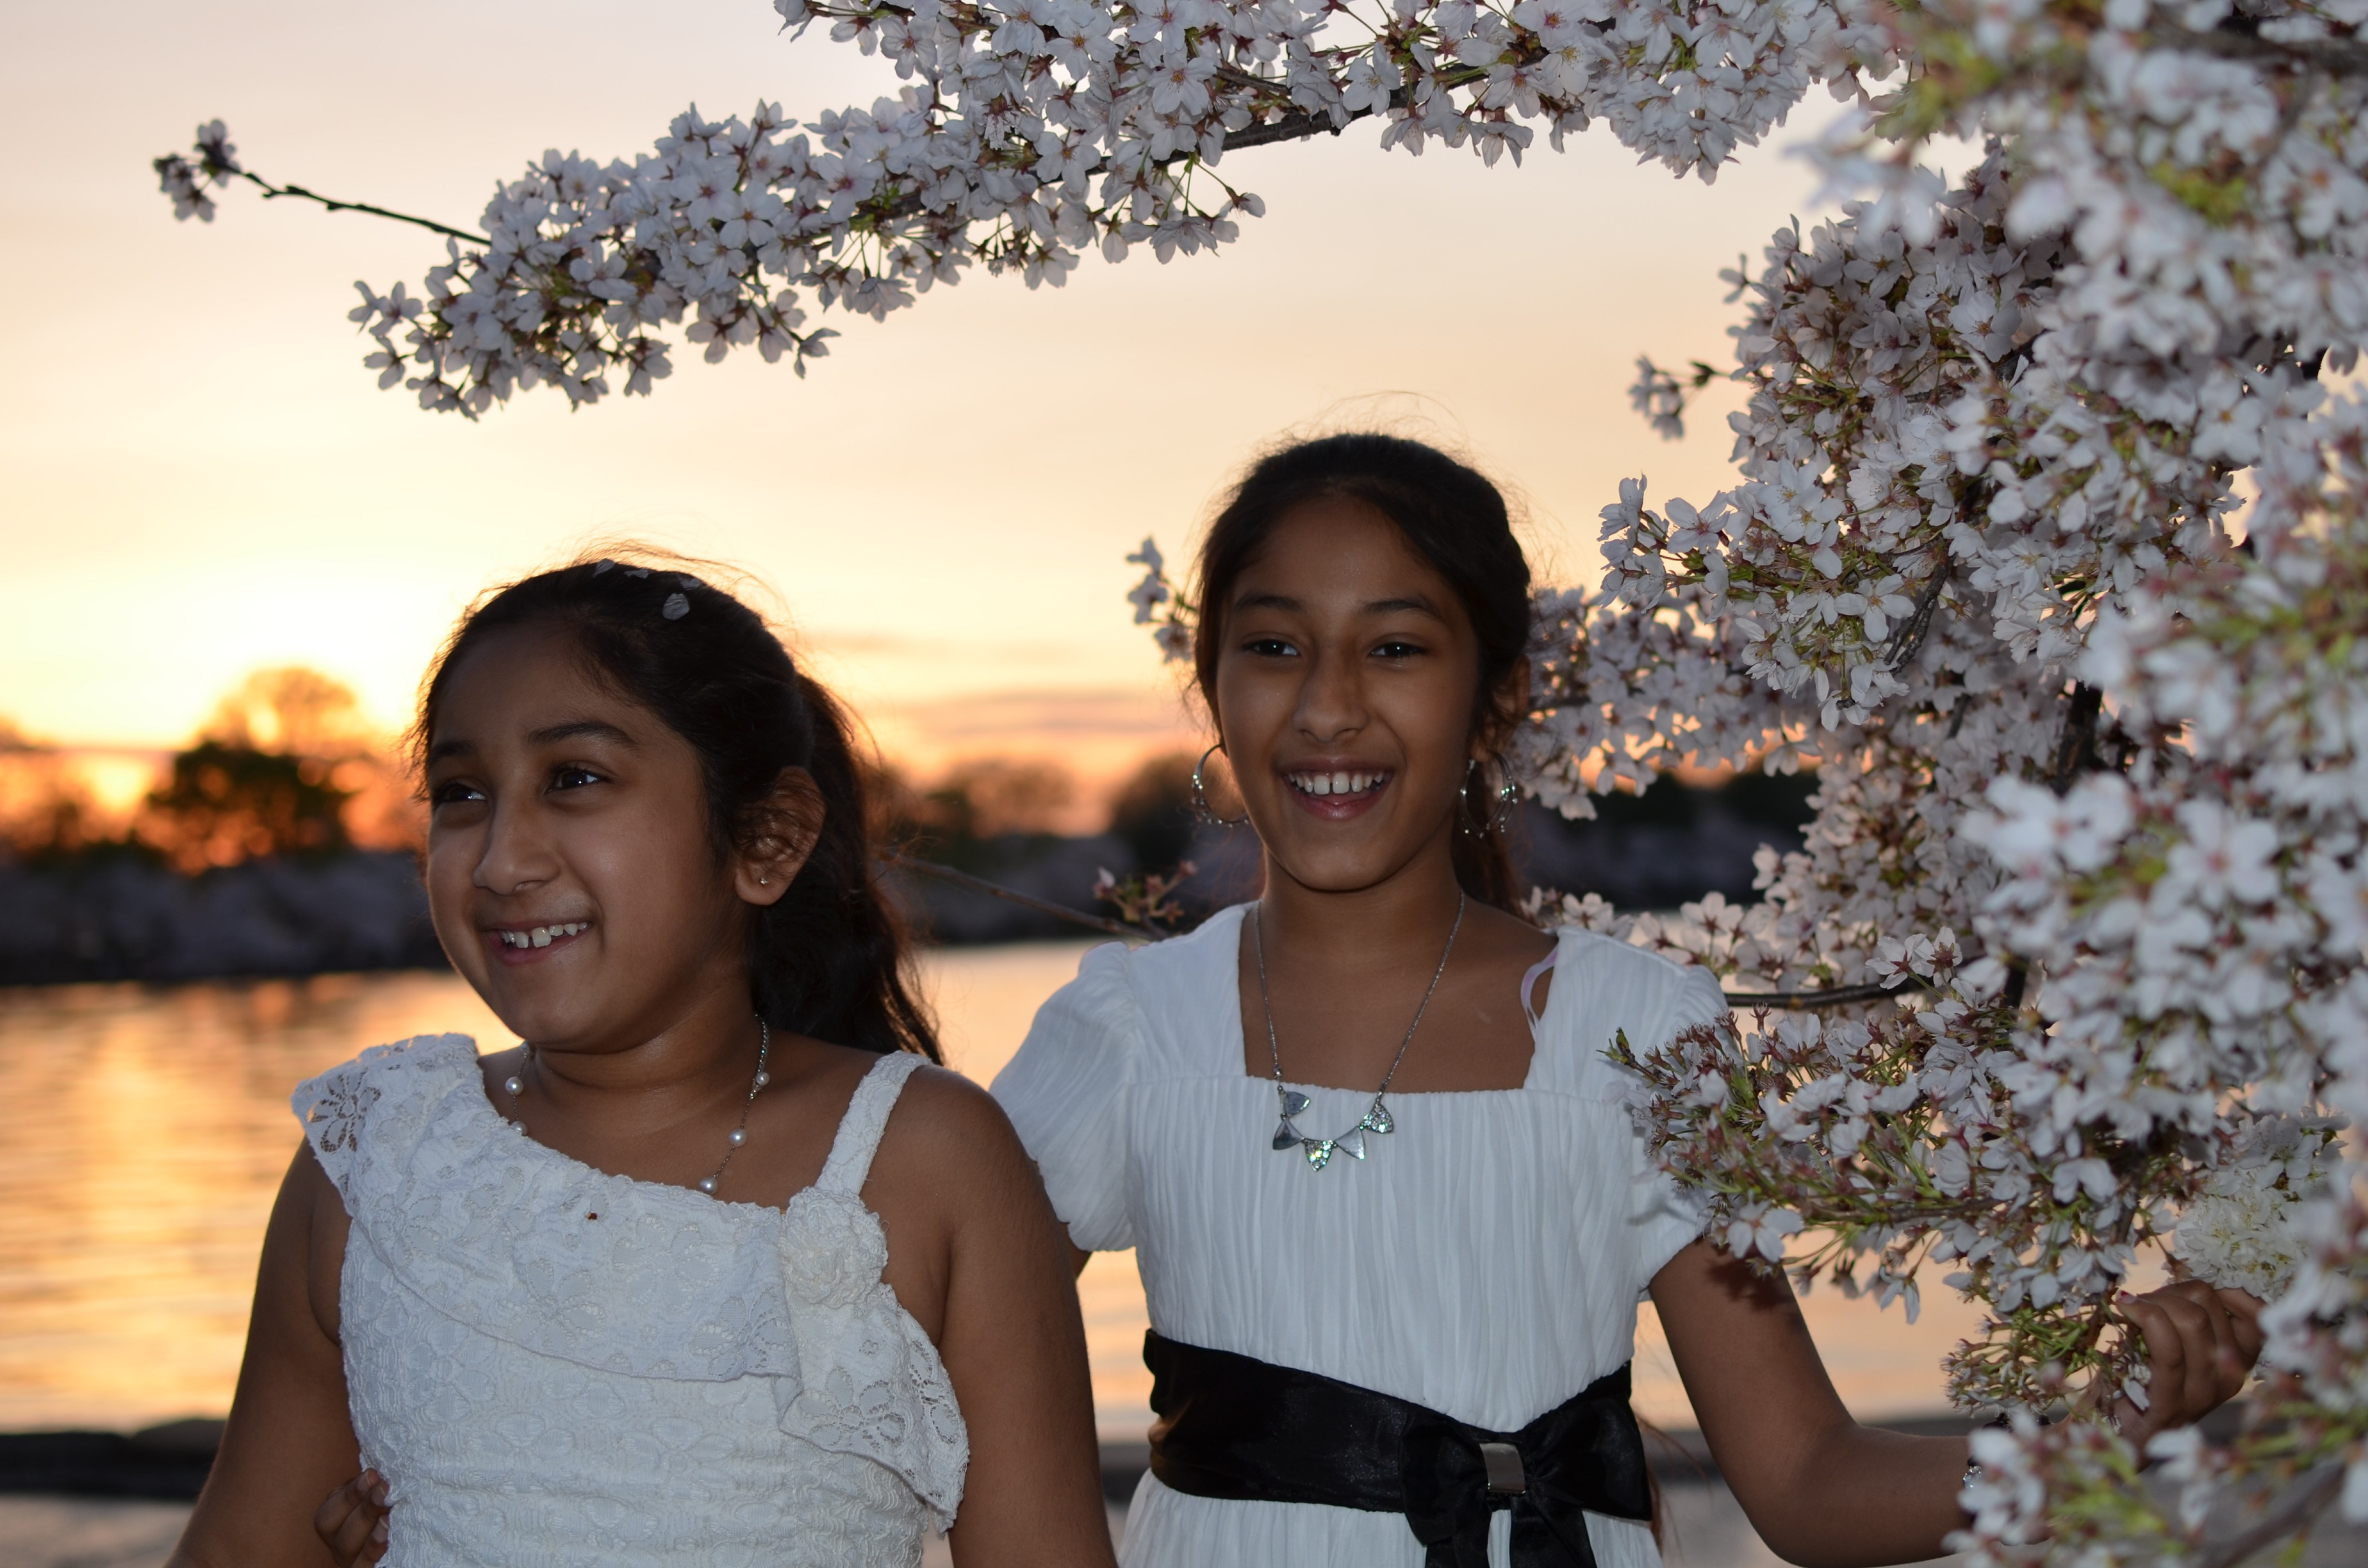 Eashana Subramanian, 11 and her younger sister, Meghana, 10